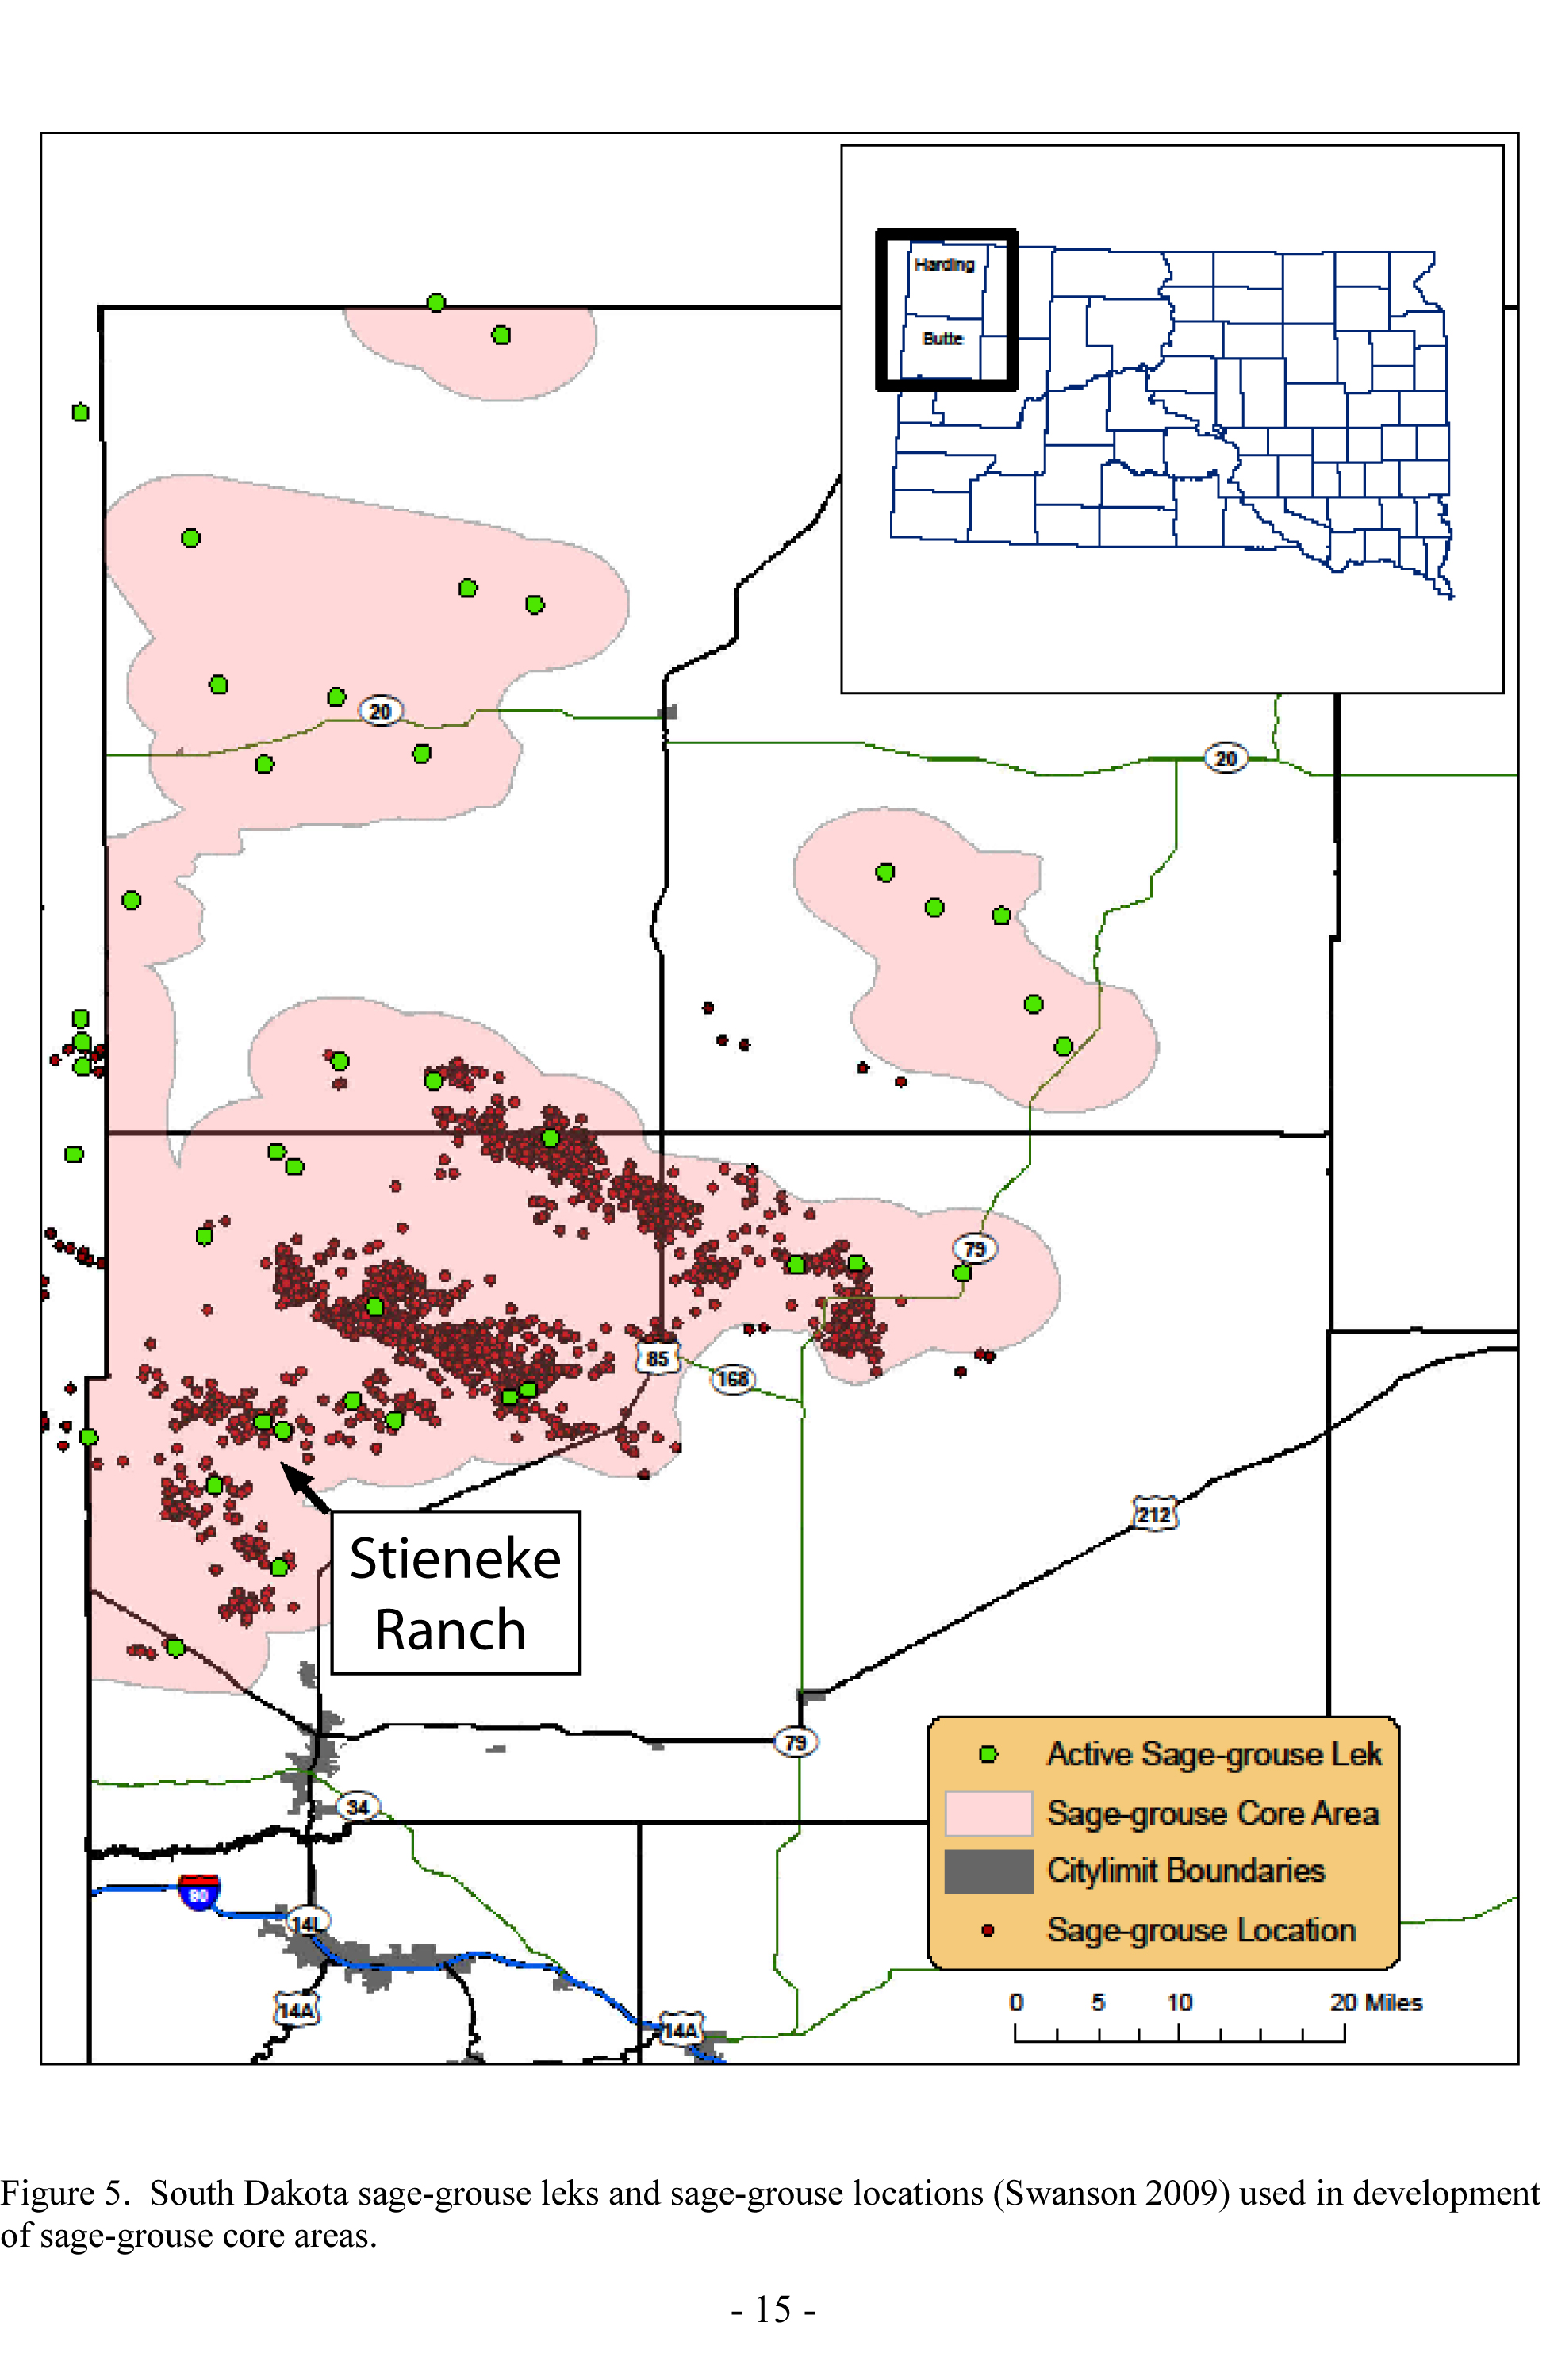 The Steineke's ranch is located in northwestern South Dakota in prime sage grouse habitat.